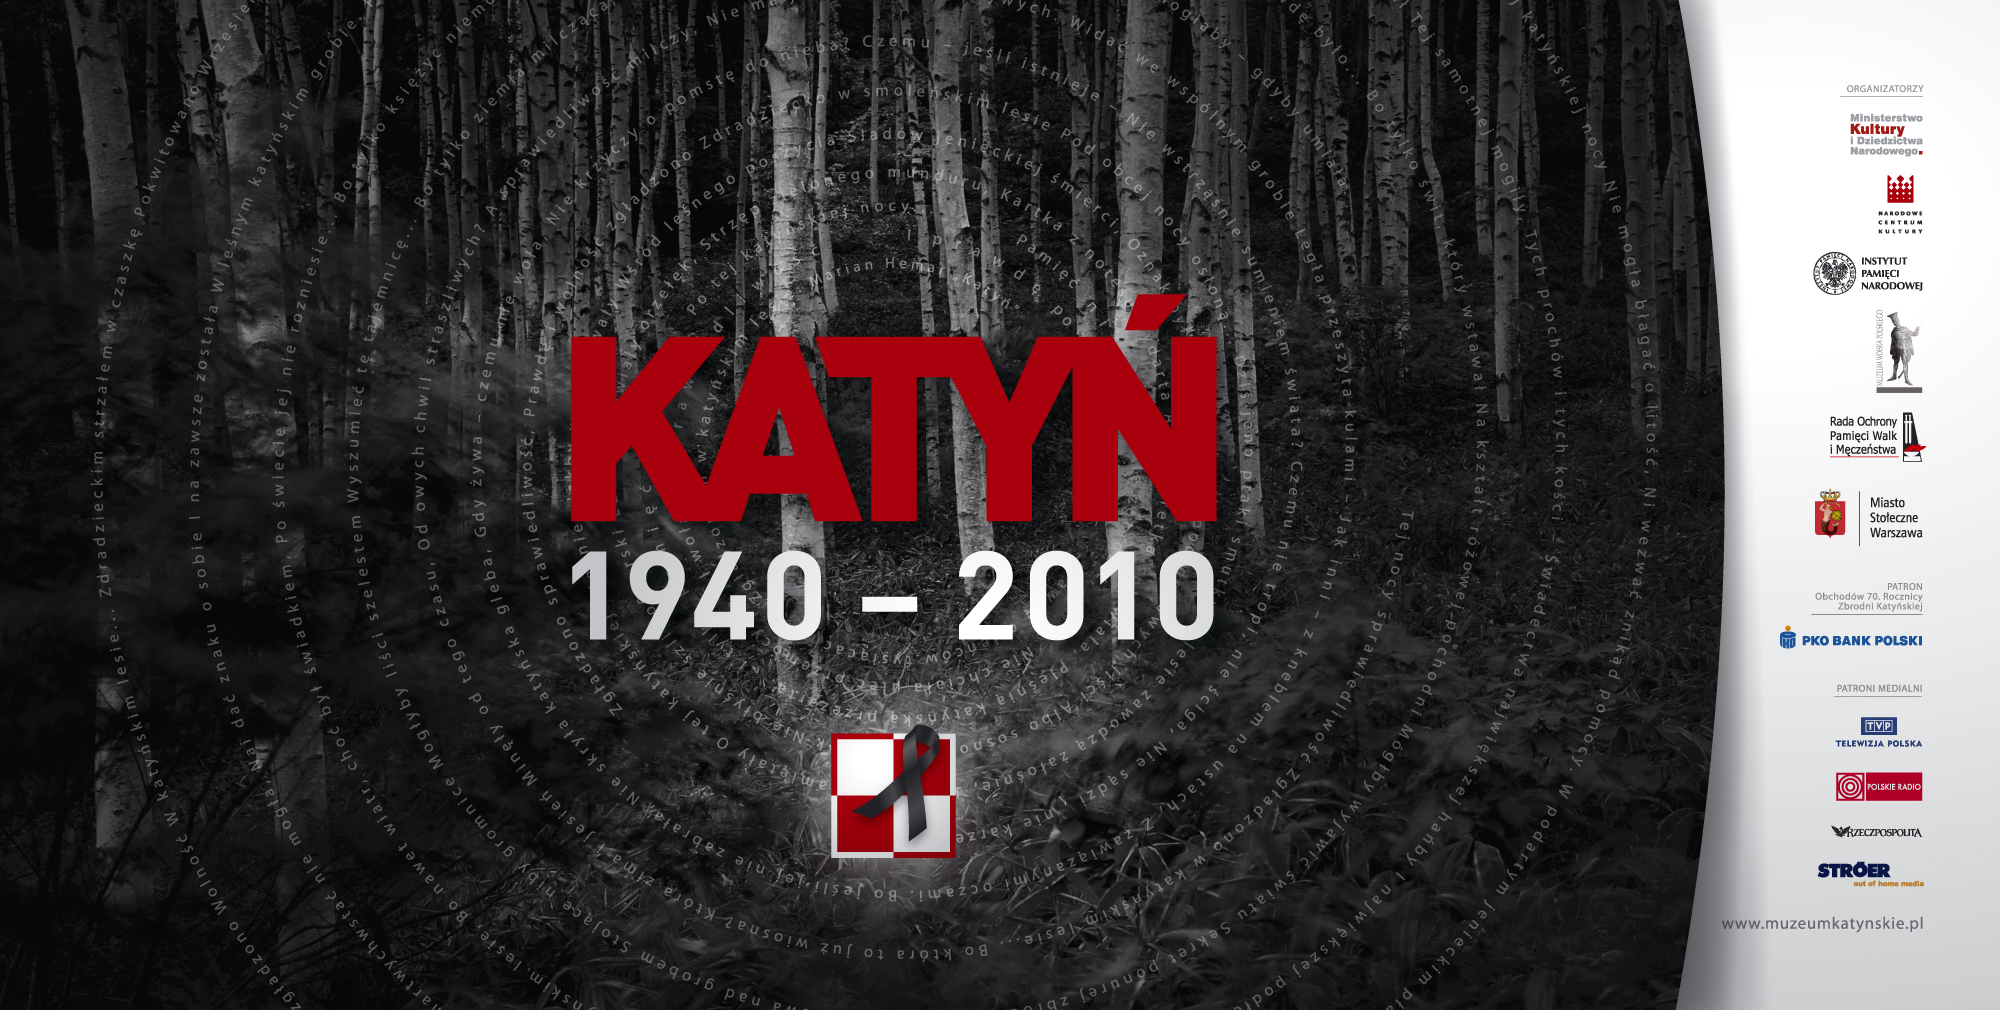 katyn 1940-2010